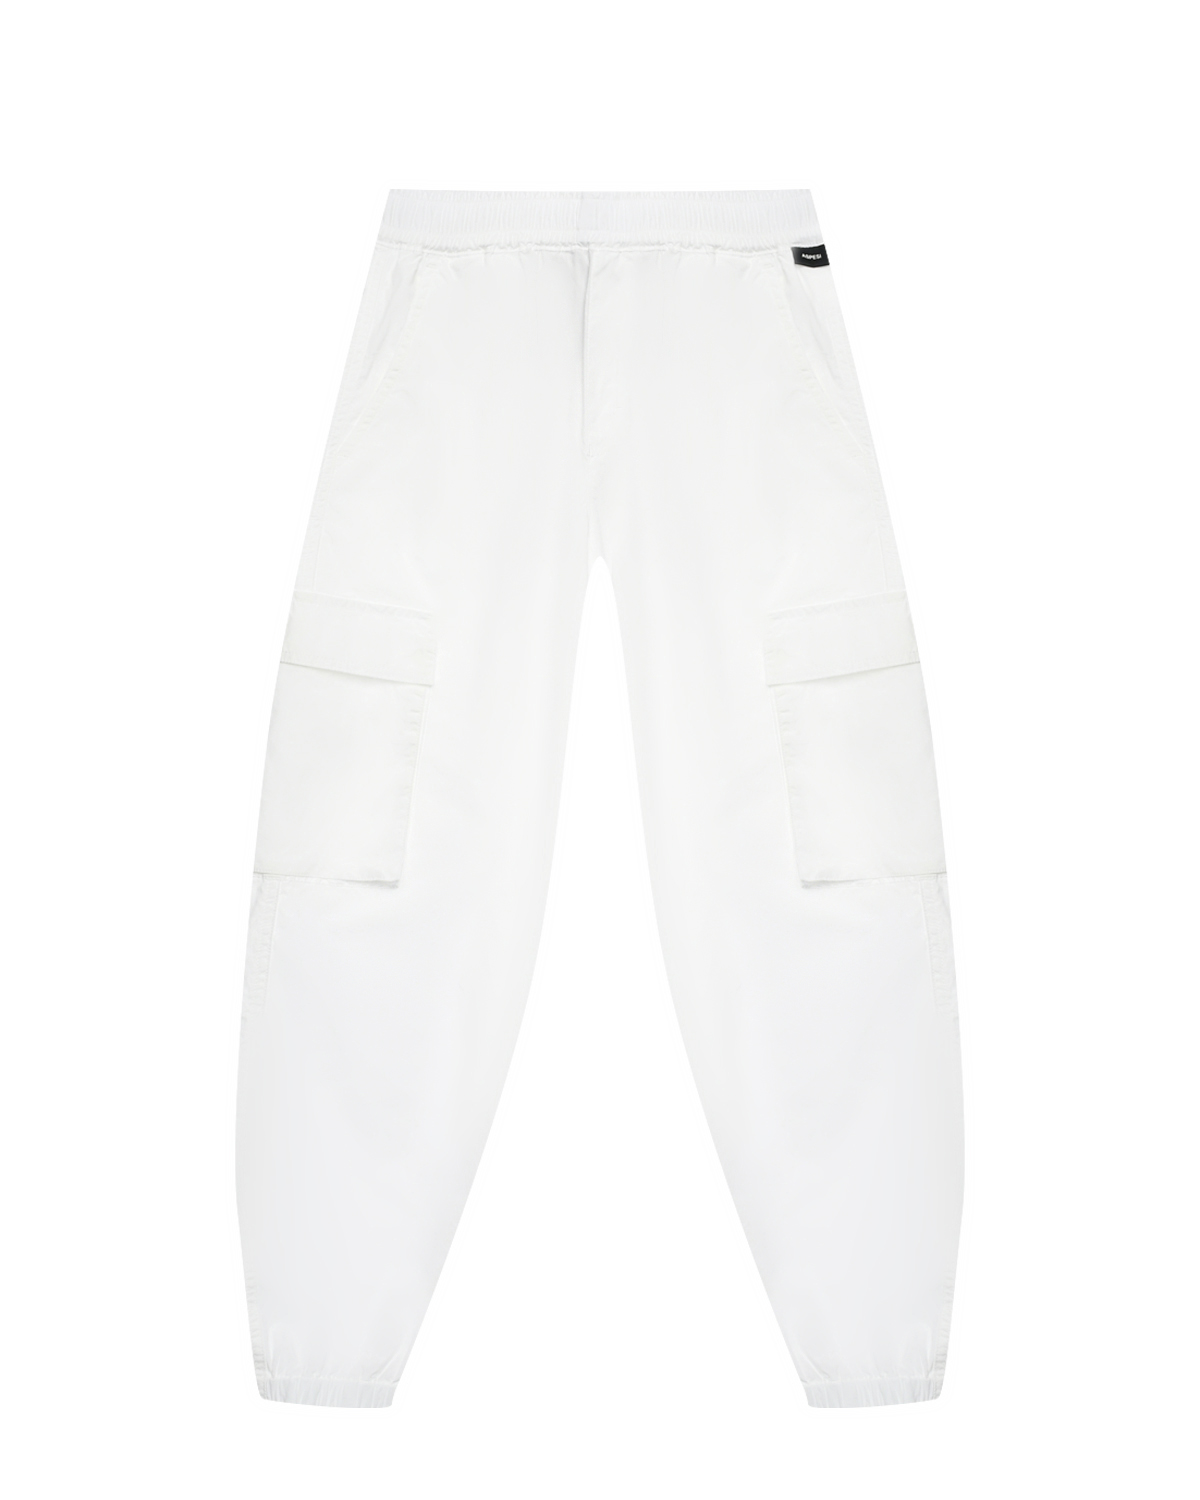 Брюки с карманами-карго, белые ASPESI, размер 140, цвет белый - фото 1